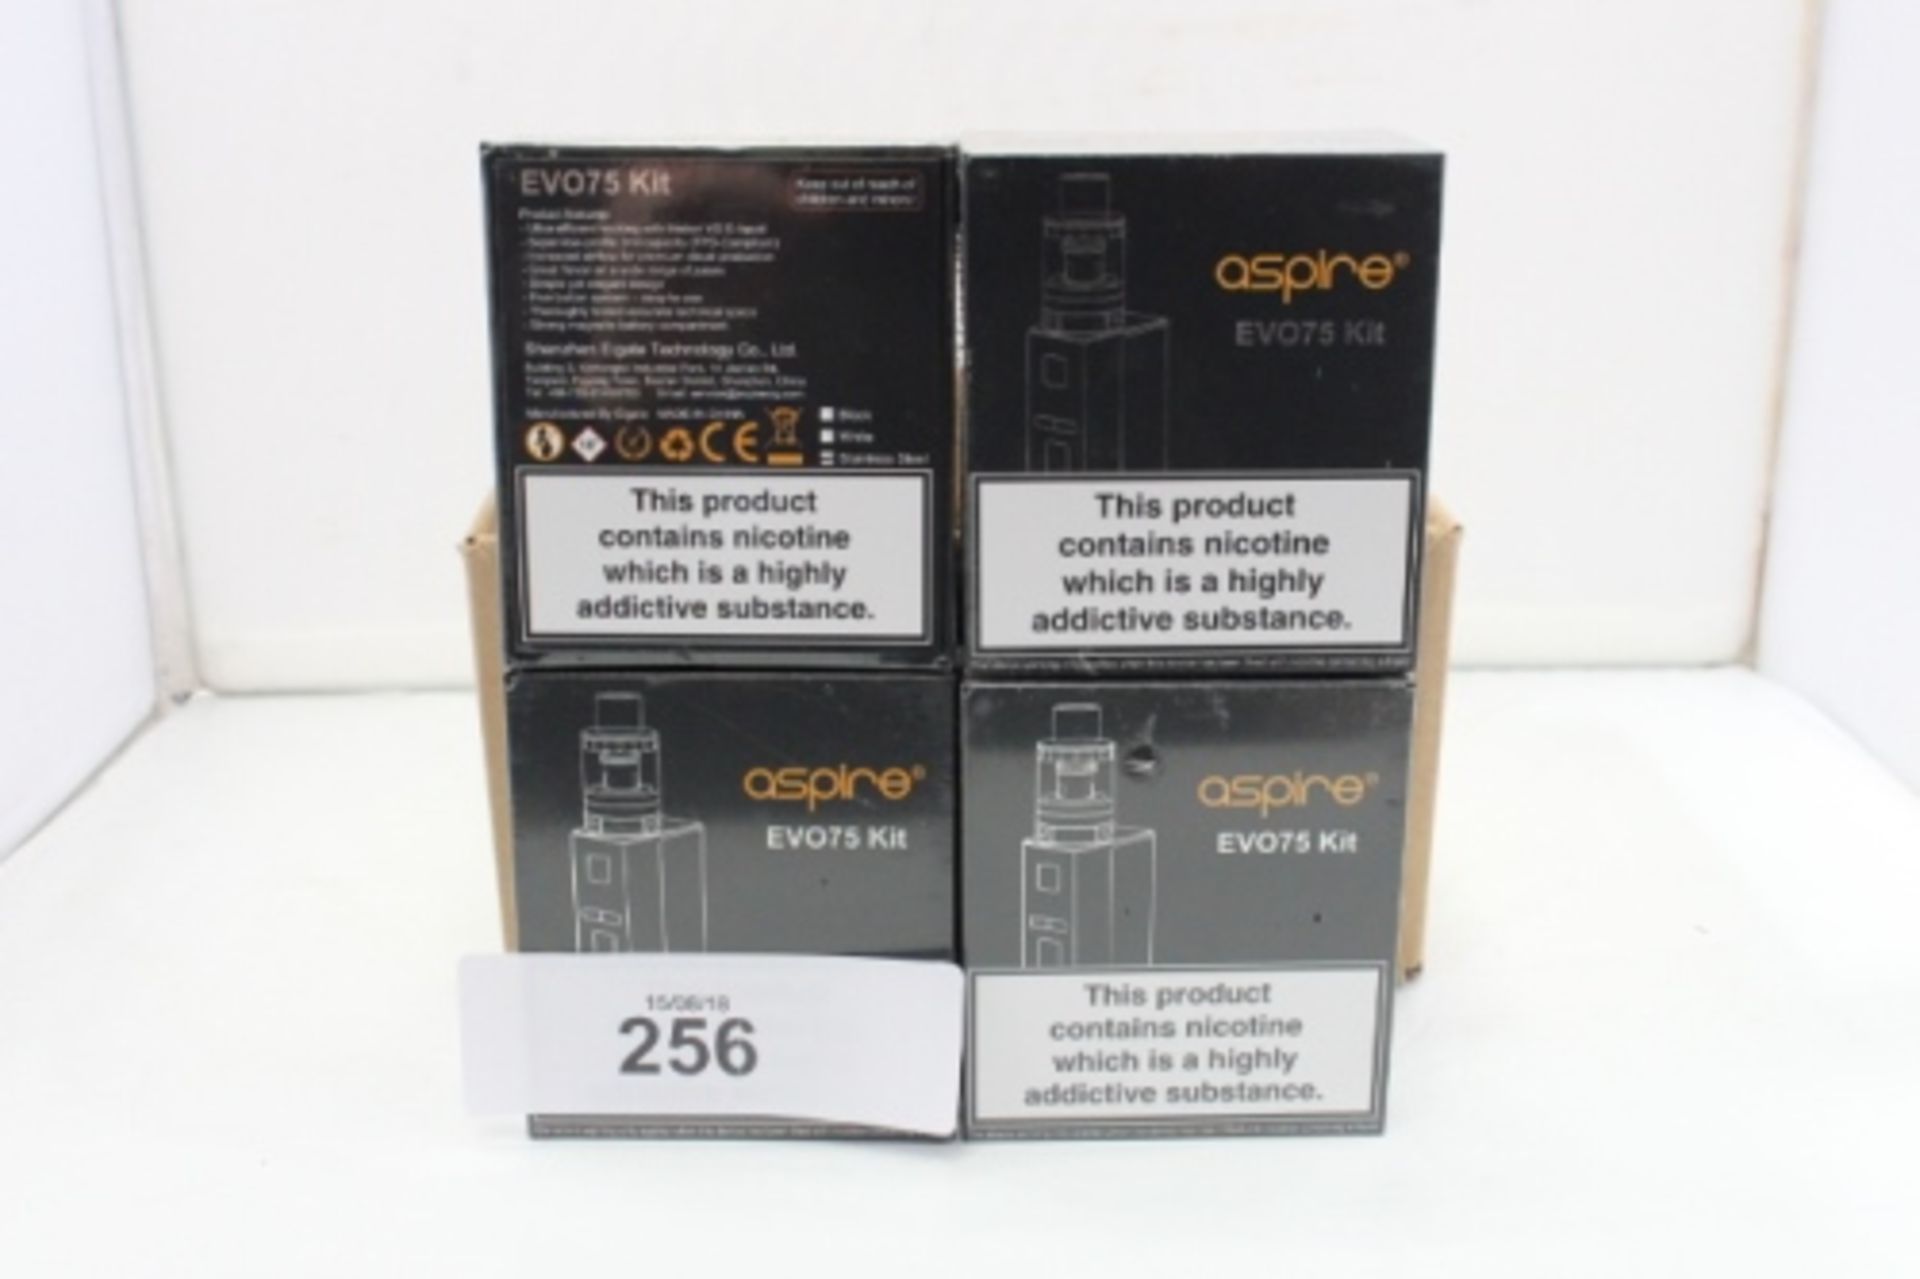 4 x Aspire EVO75 vaping kits, RRP £40 each - Sealed new in box (FC6)